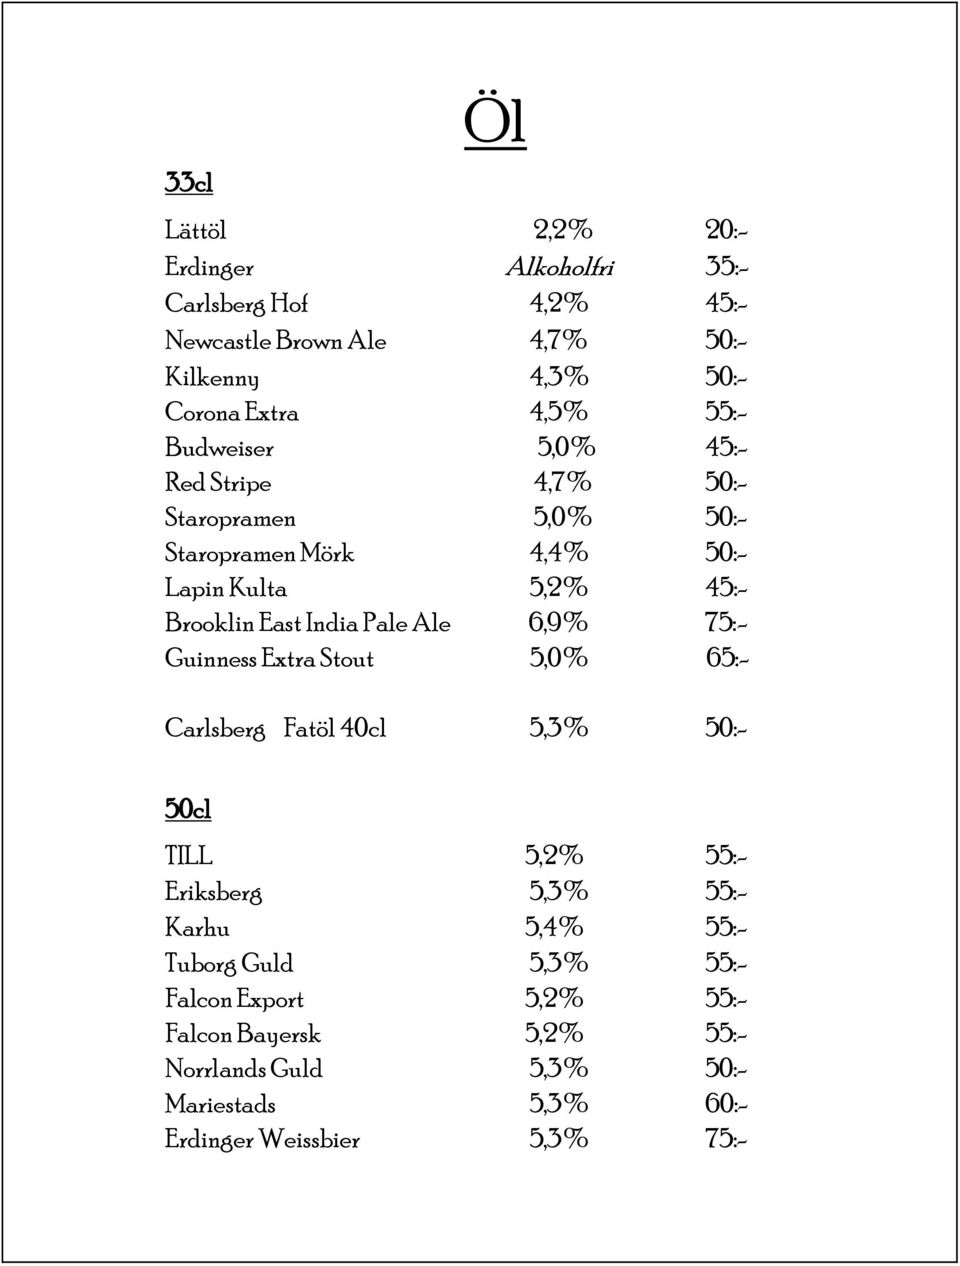 India Pale Ale 6,9% 75:- Guinness Extra Stout 5,0% 65:- Carlsberg Fatöl 40cl 5,3% 50:- 50cl TILL 5,2% 55:- Eriksberg 5,3% 55:- Karhu 5,4%